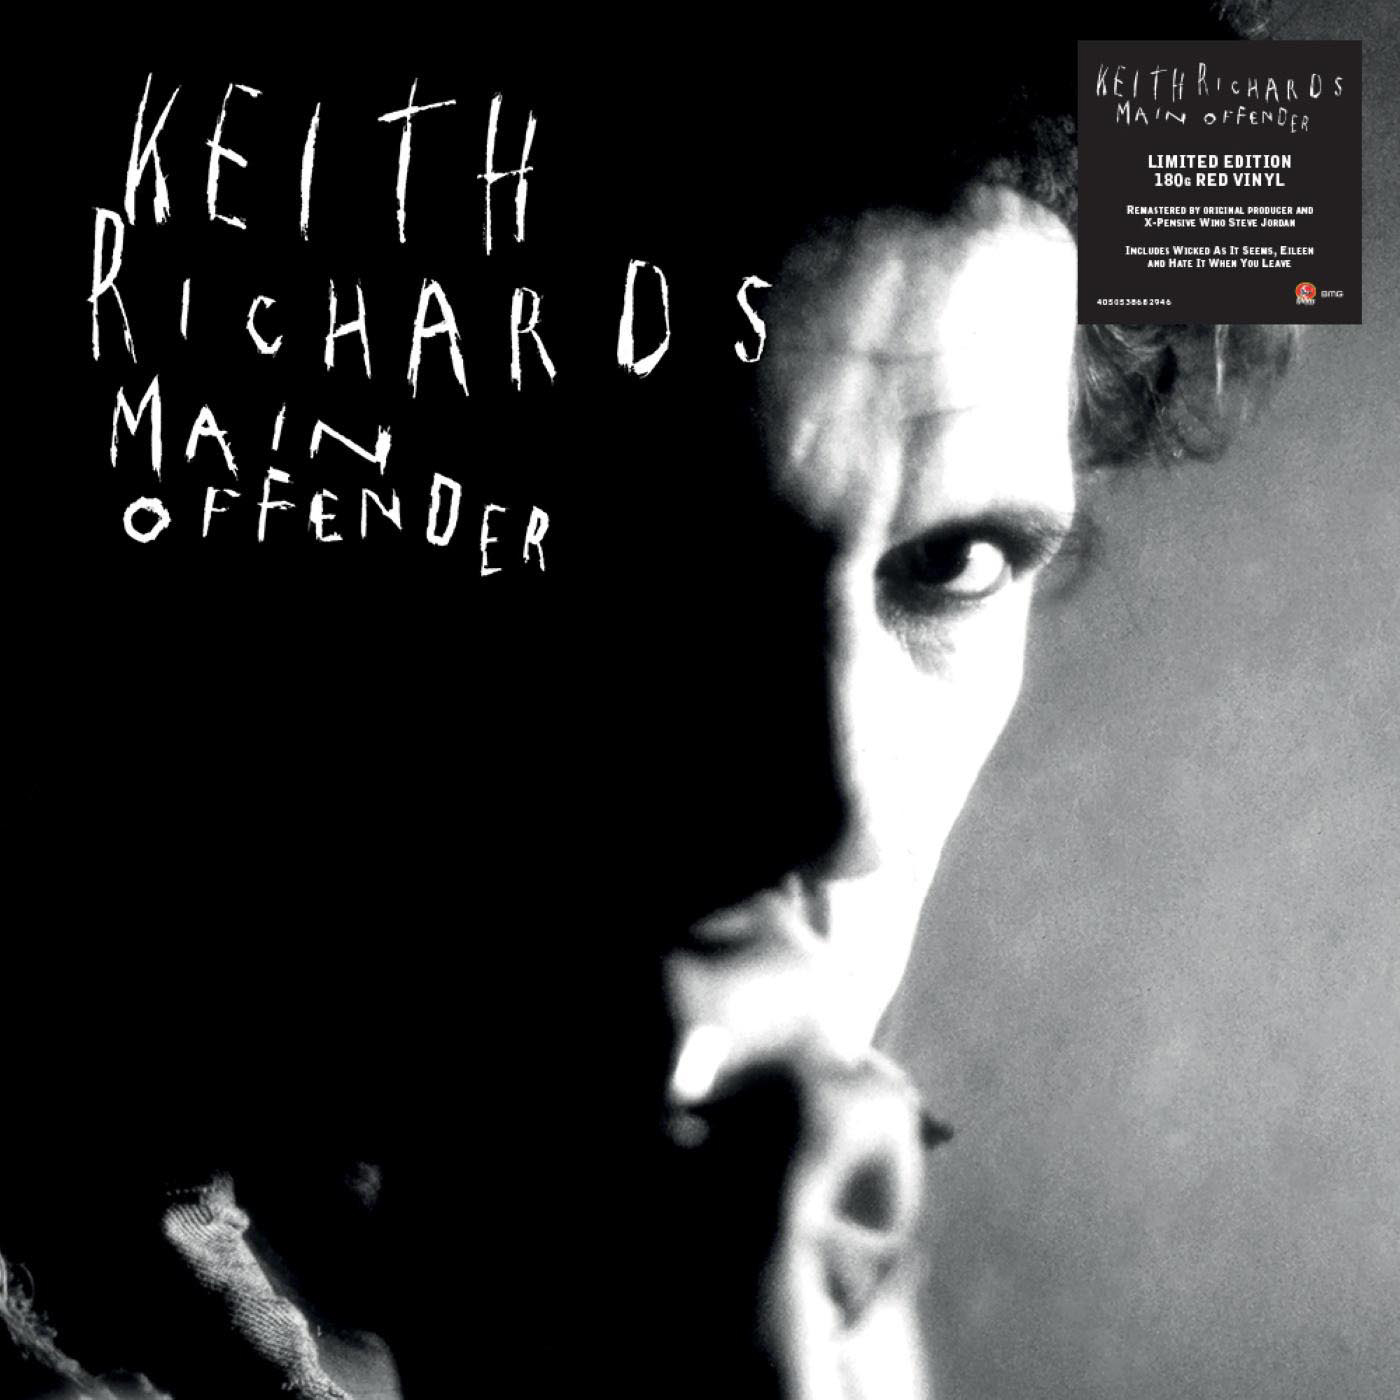 (Remastered) - Vinyl) - (Vinyl) Main (Red Offender Richards Keith